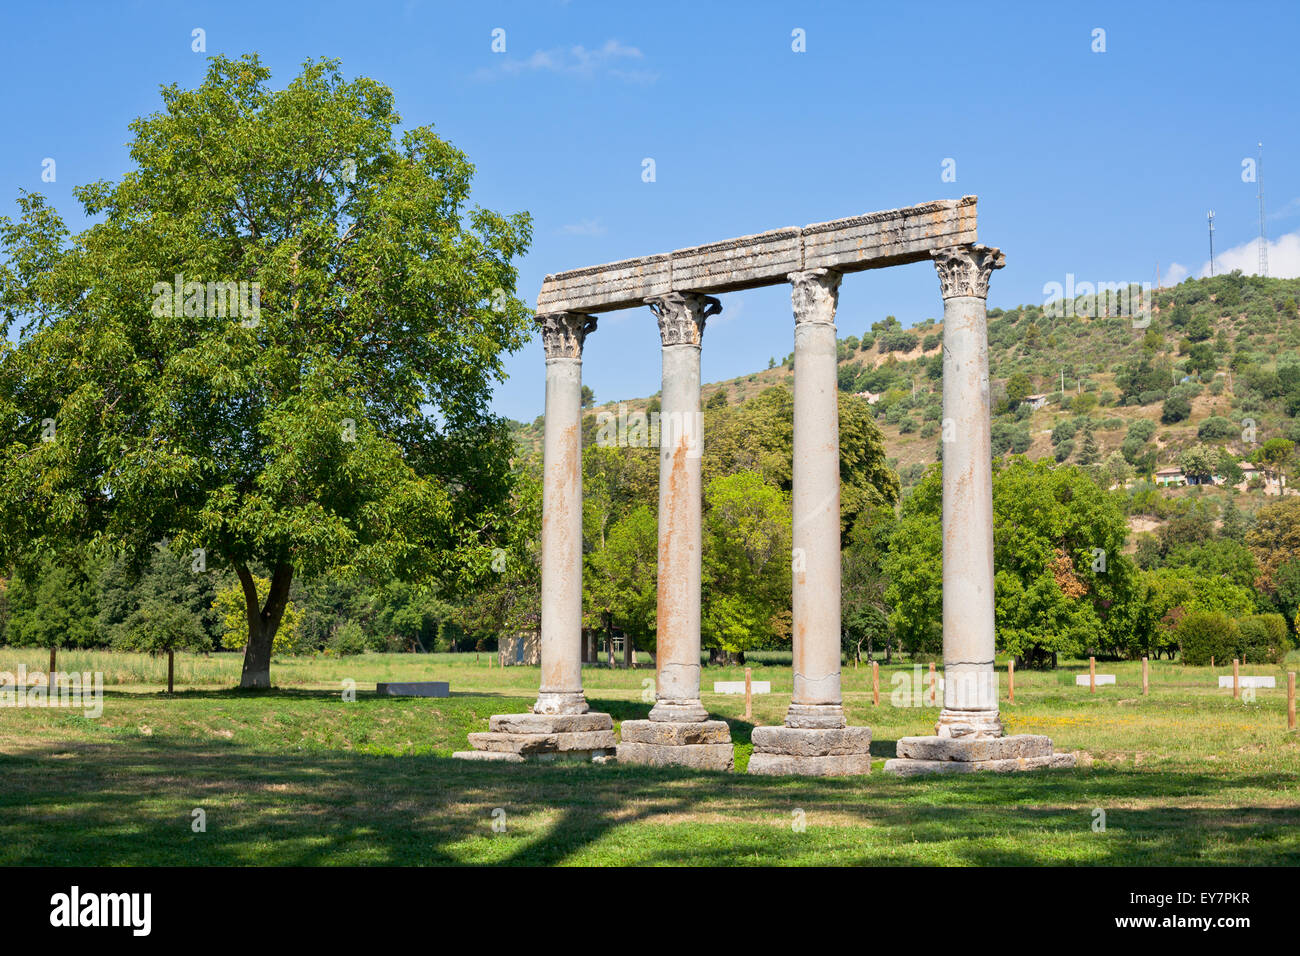 Ancient Roman Temple of Apollo in Riez, Alpes de Haute Provence, France Stock Photo